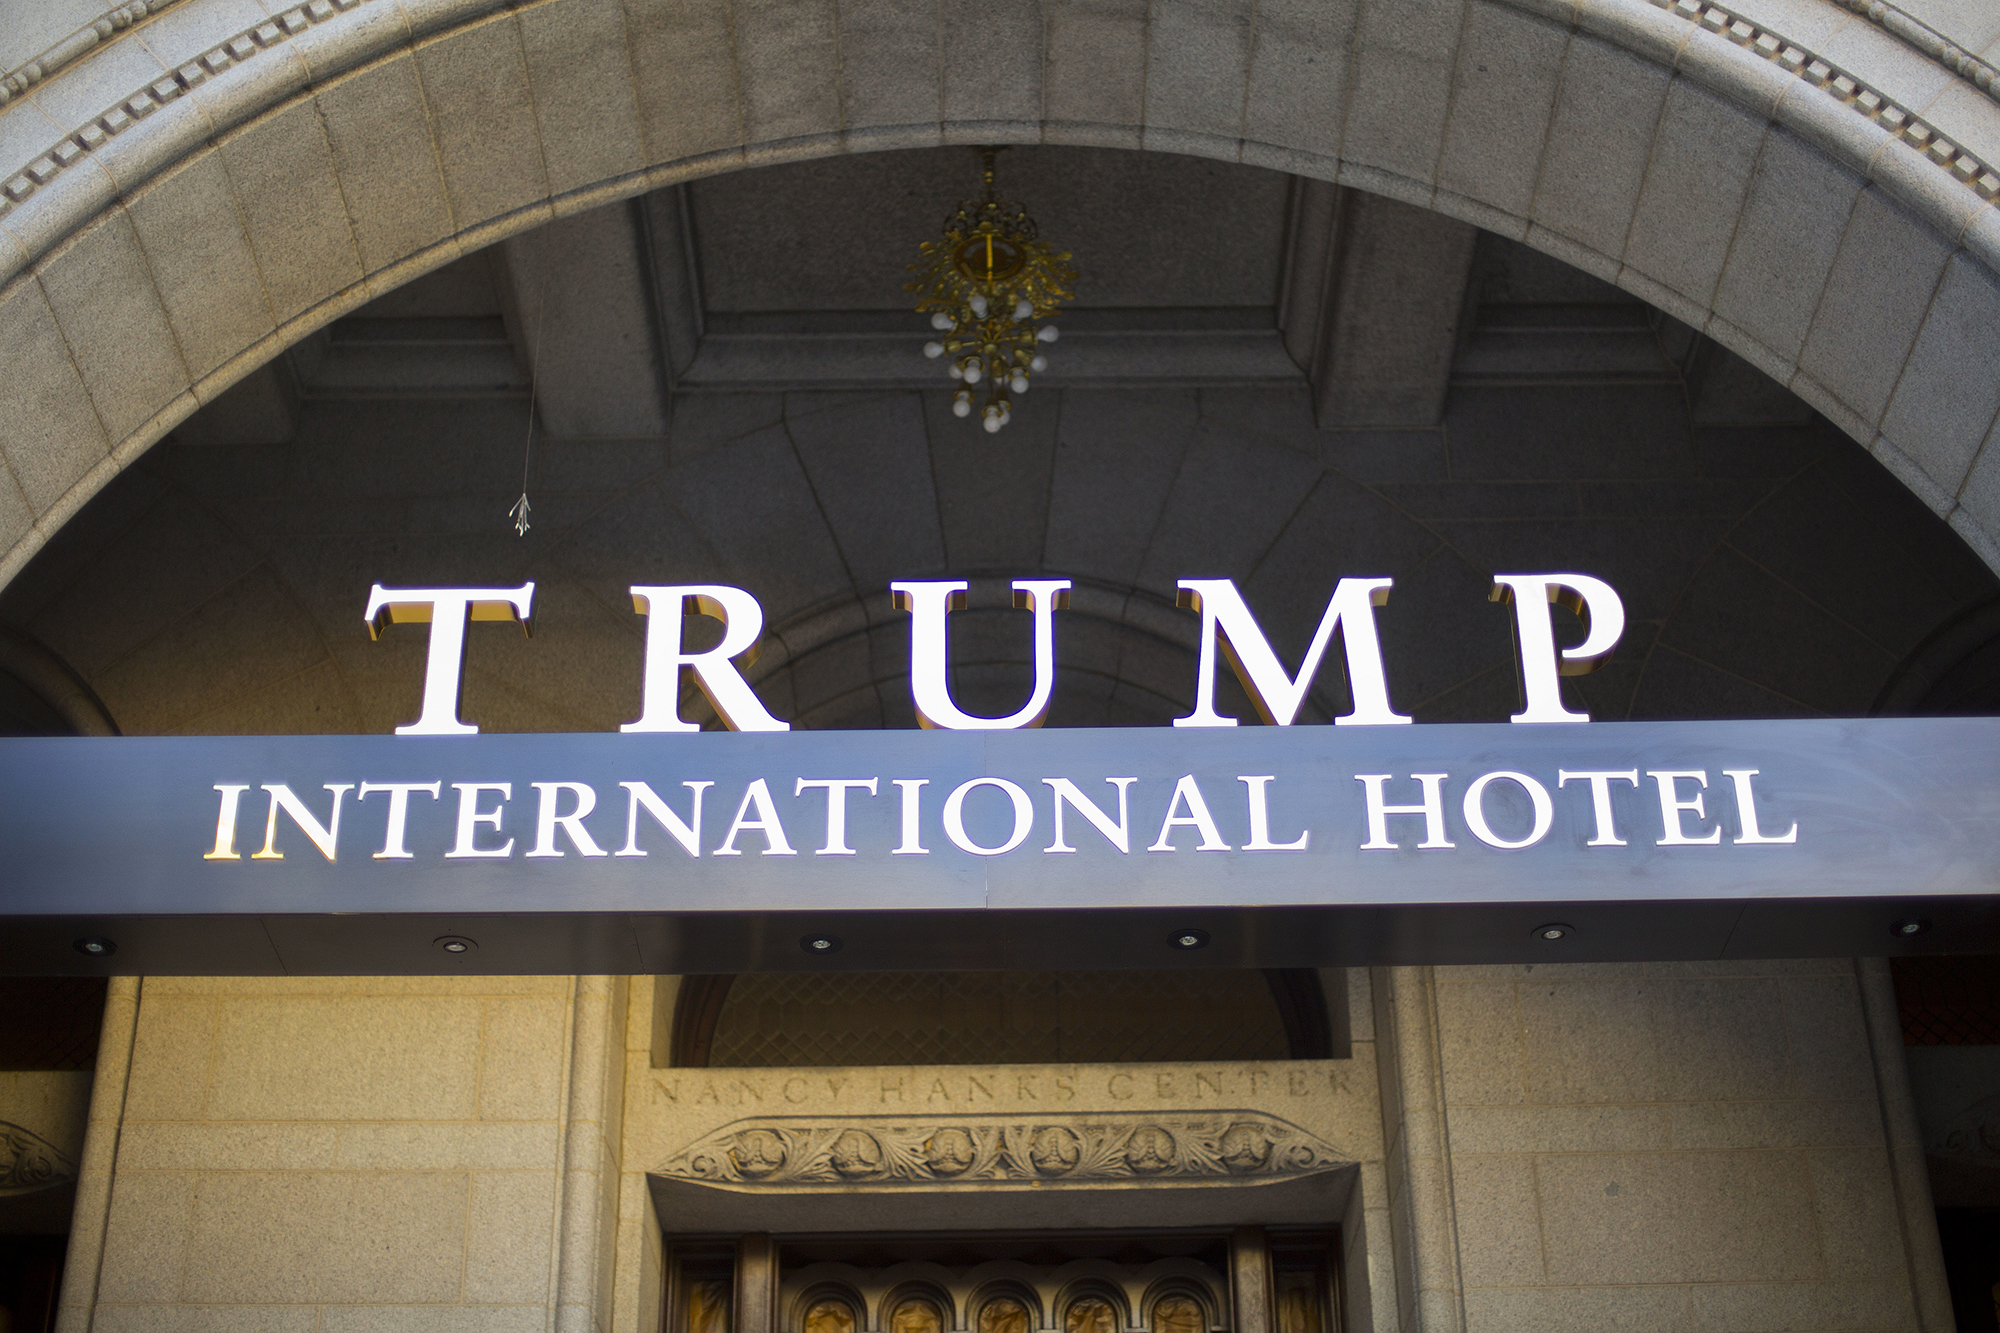 Trump DC Hotel